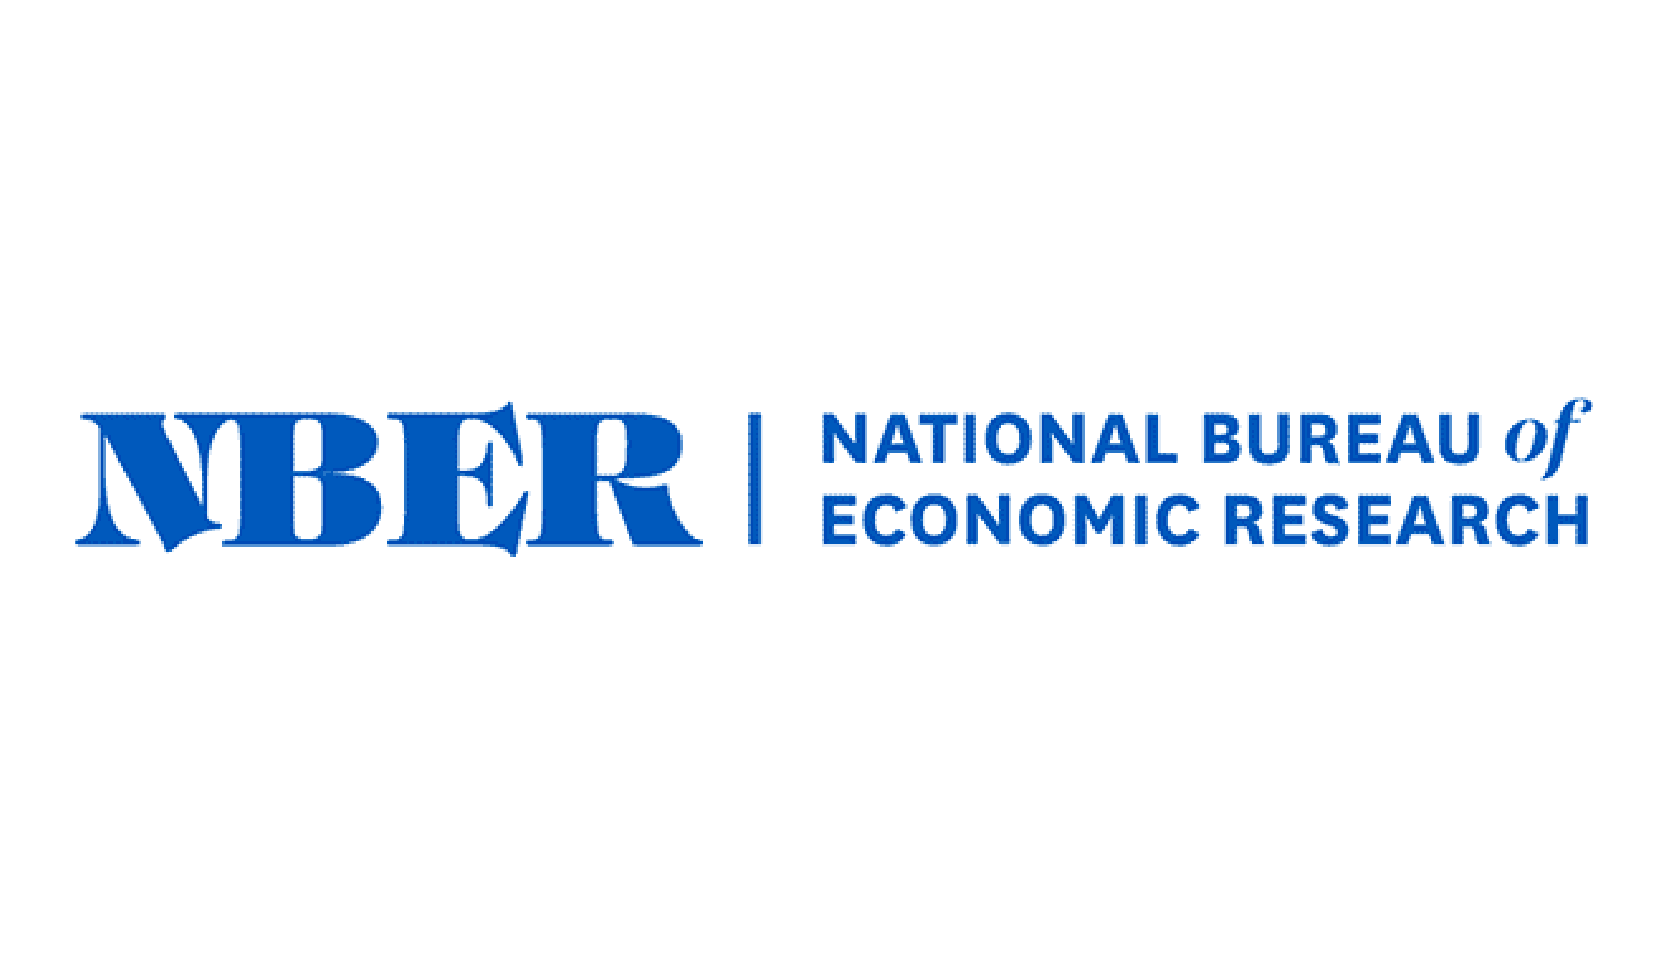 National Bureau of Economic Research (NBER)